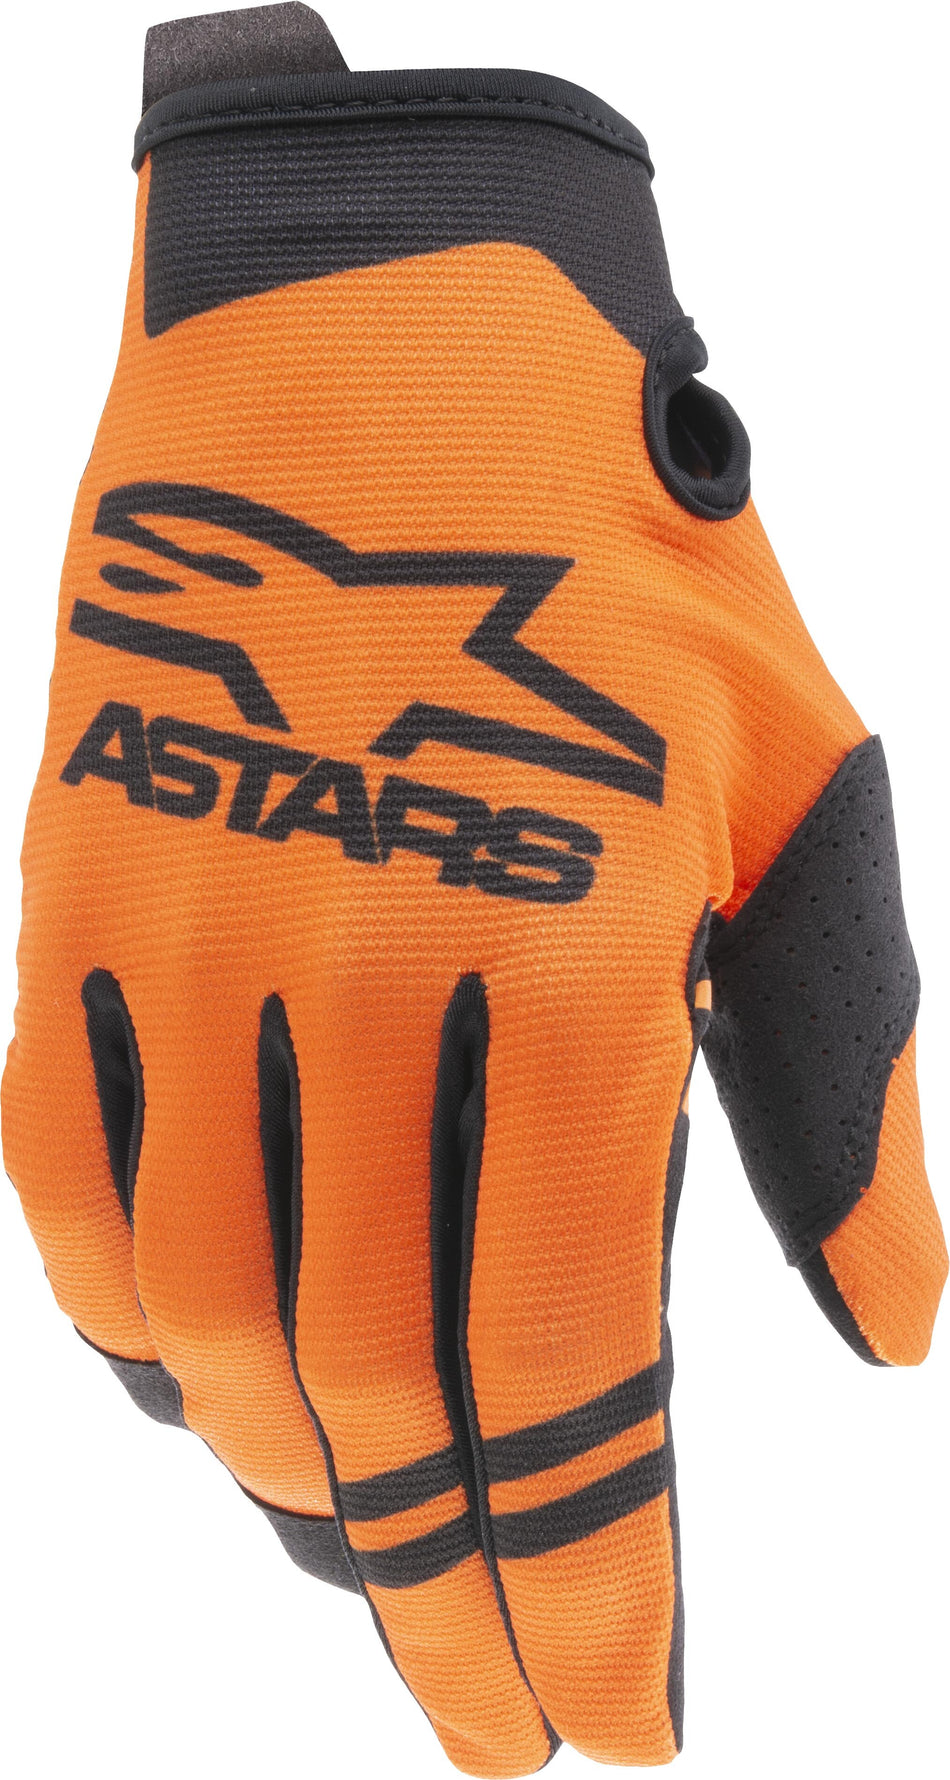 ALPINESTARS Youth Radar Gloves Orange/ Black Md 3541821-41-M